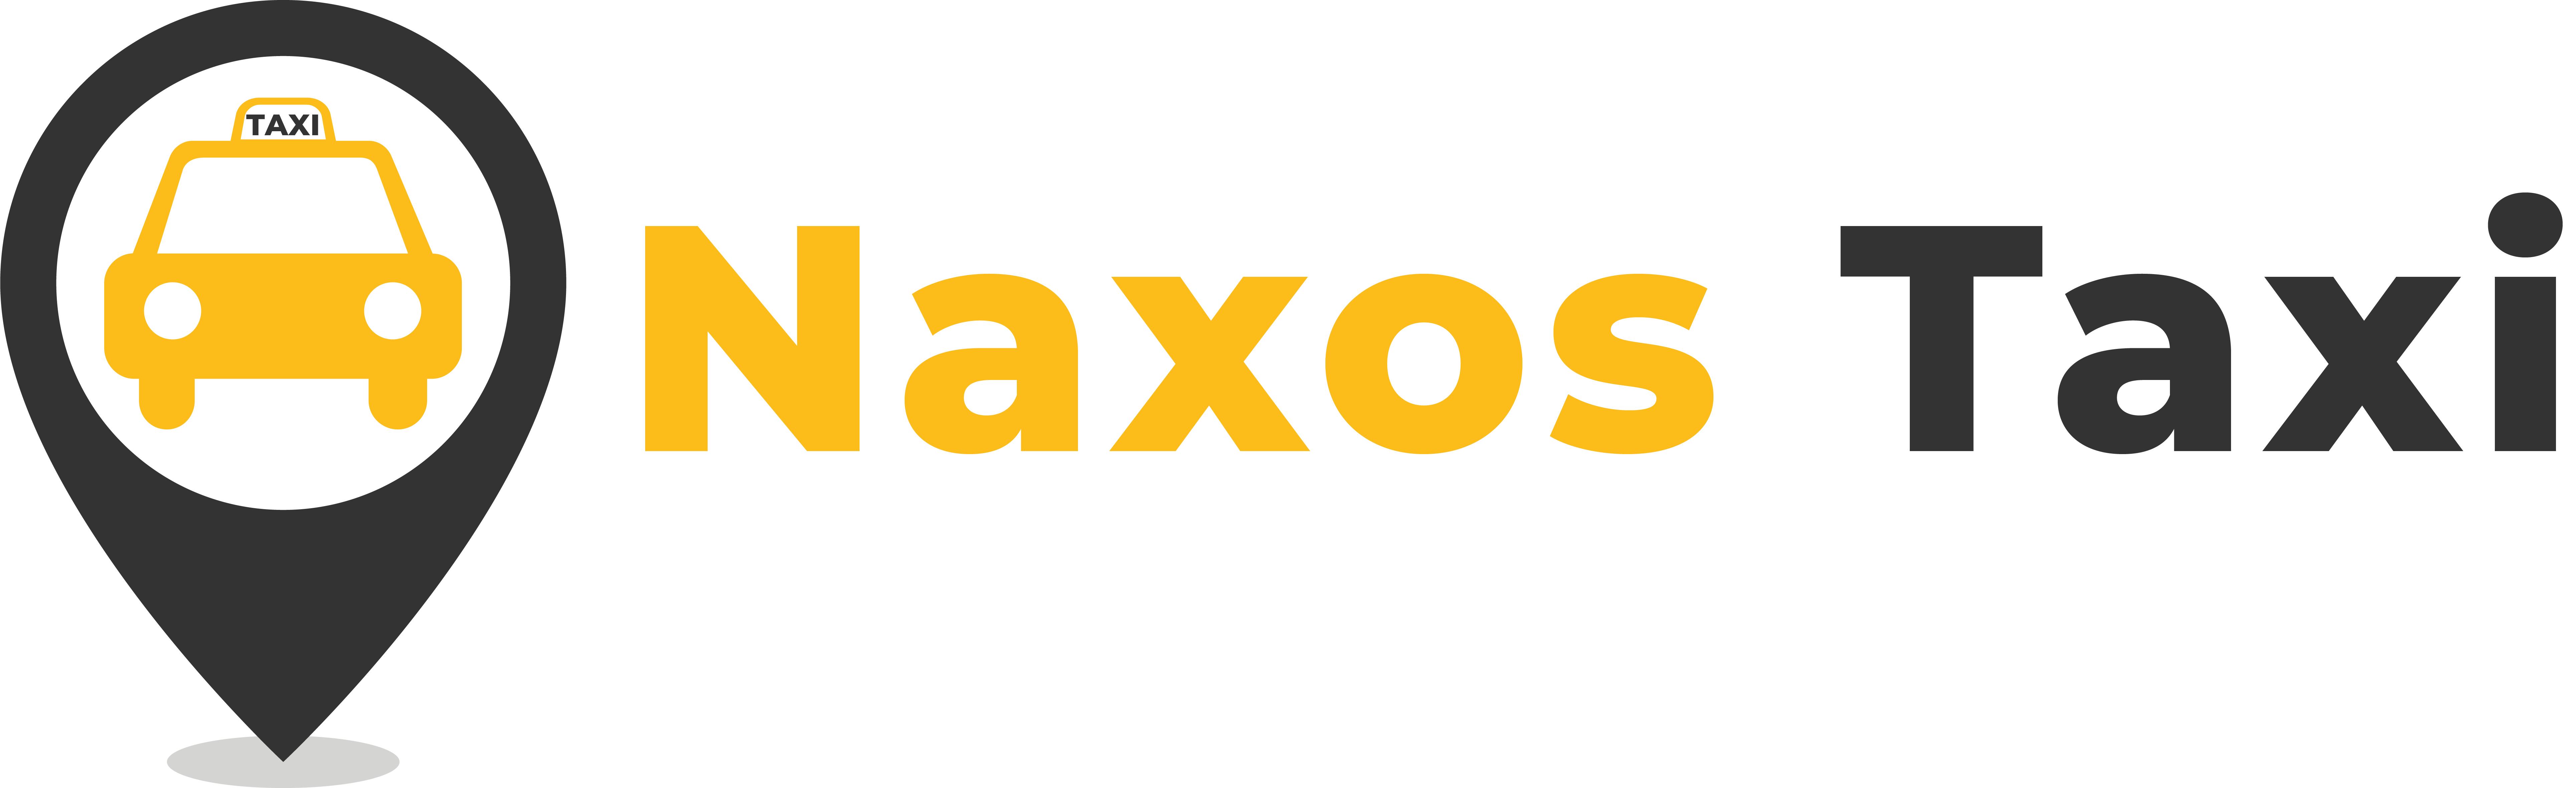 Naxos taxi